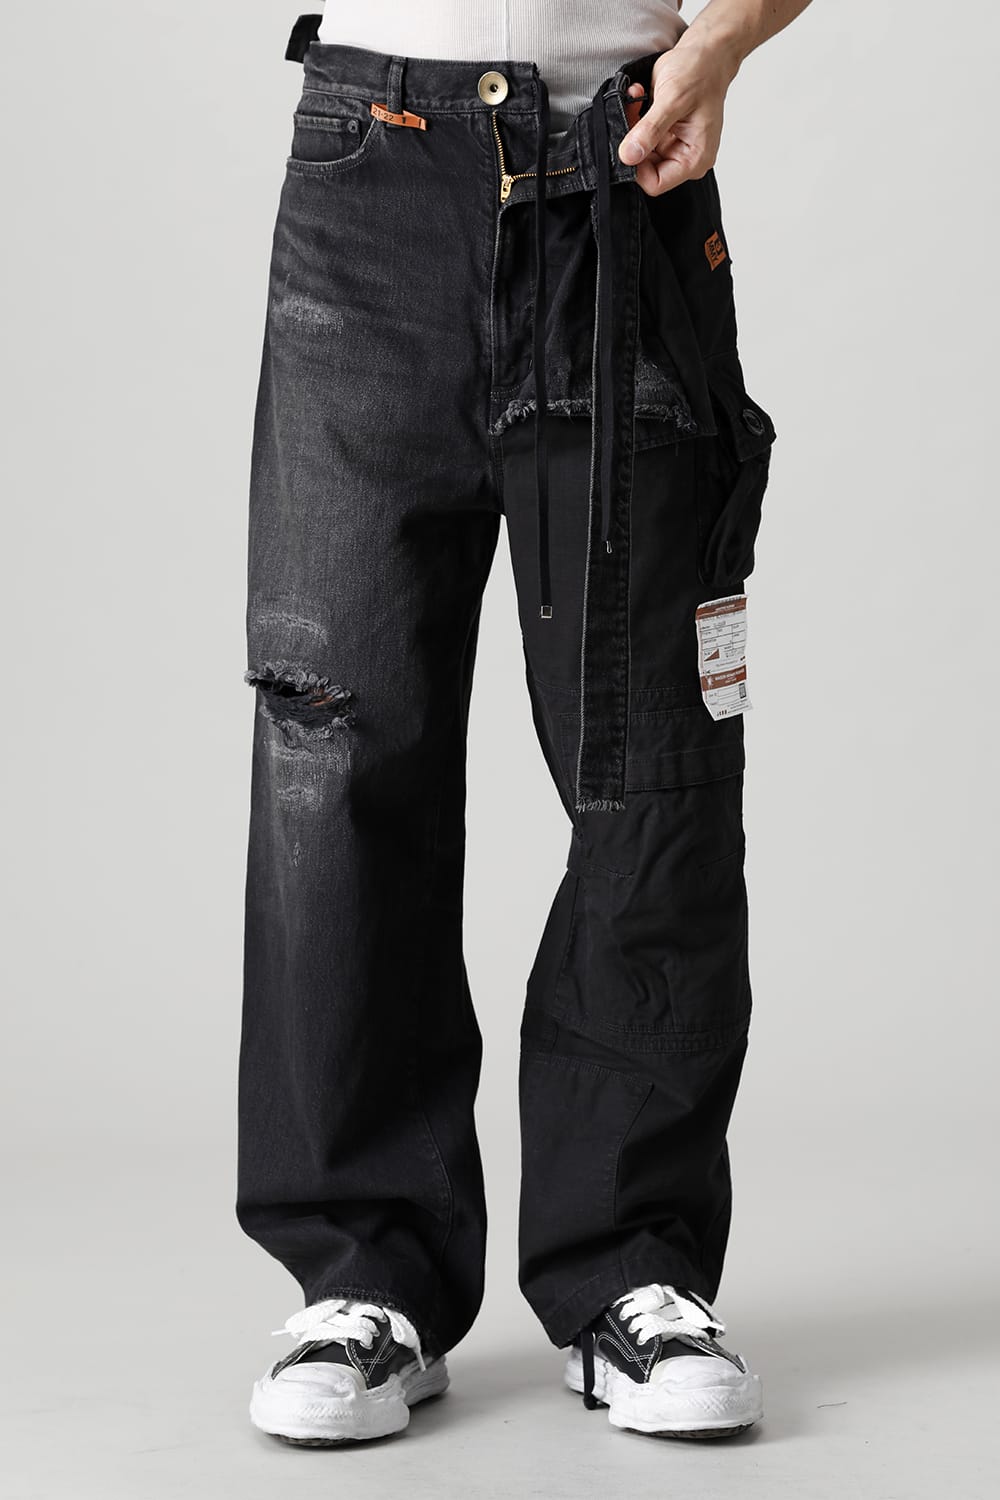 Denim × Military Combined Pants